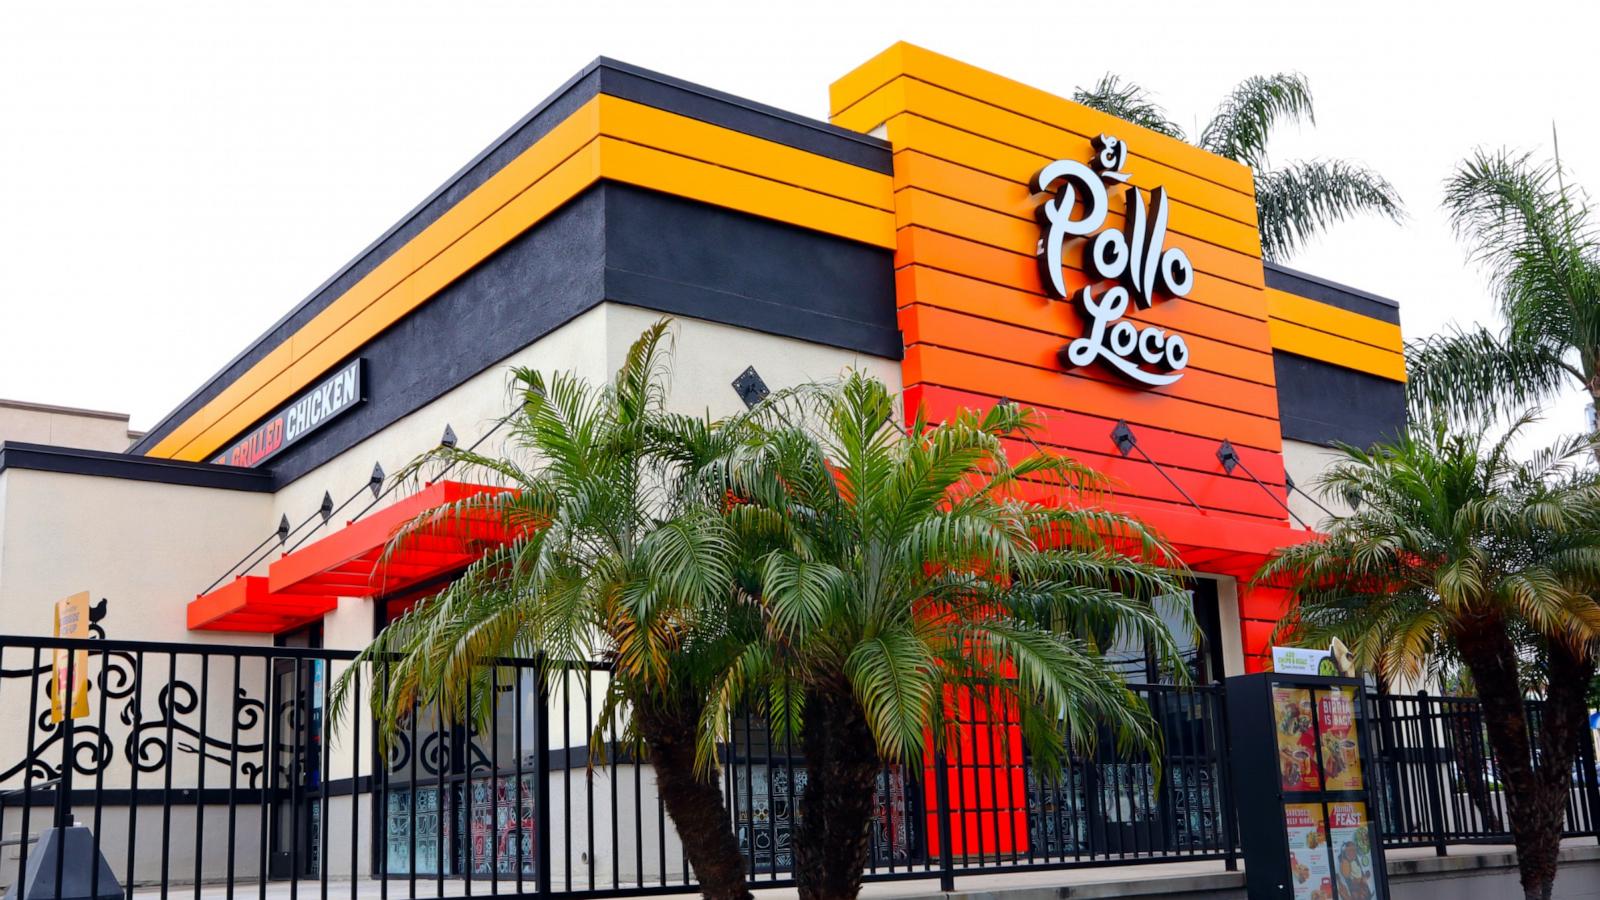 PHOTO: Stock image of "El Pollo Loco" restaurant chain in Los Angeles.